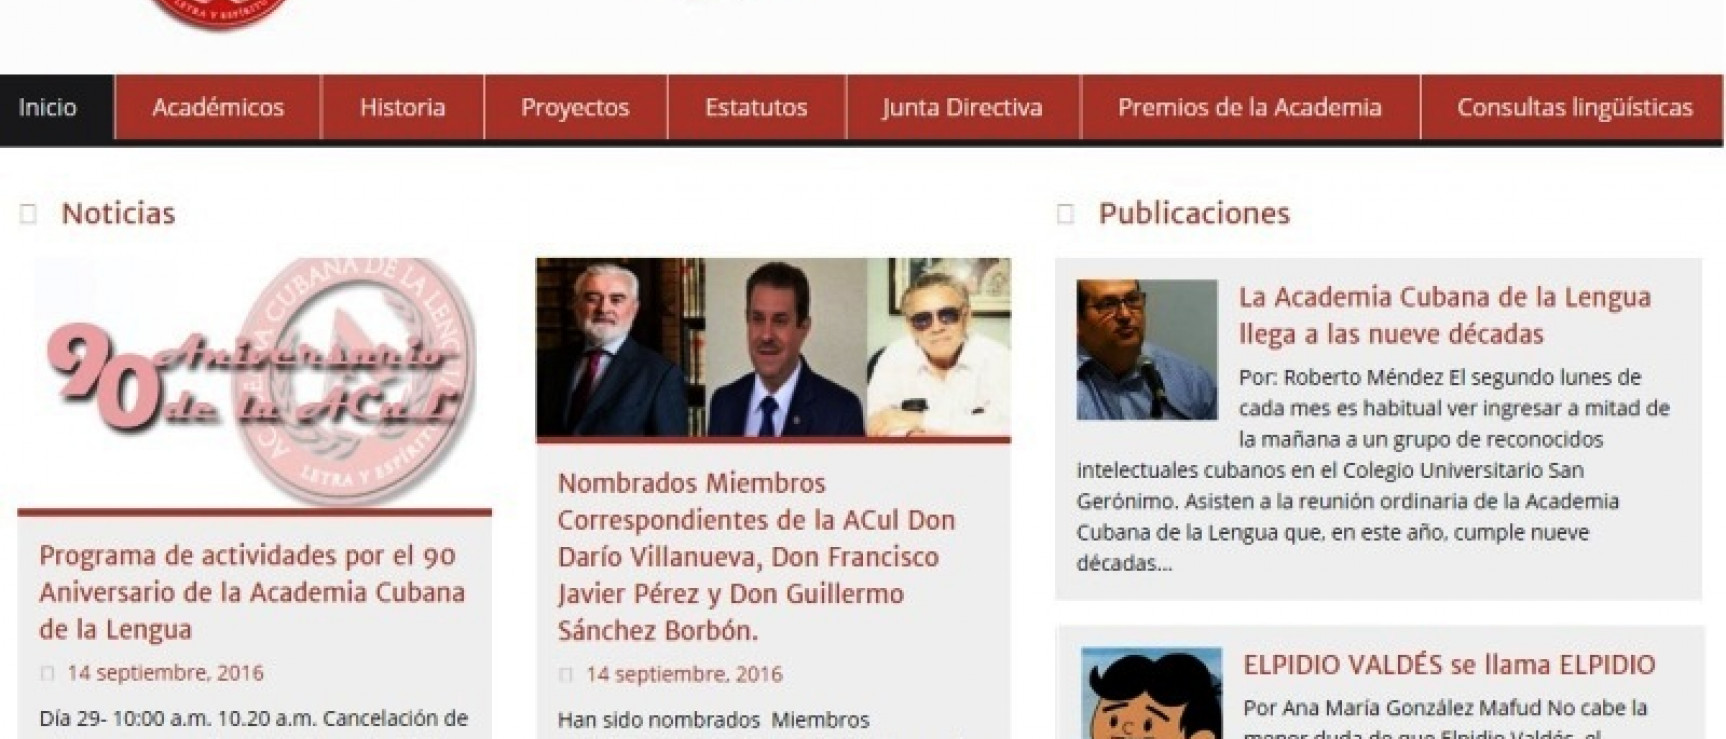 Nuevo portal de la Academia Cubana de la Lengua